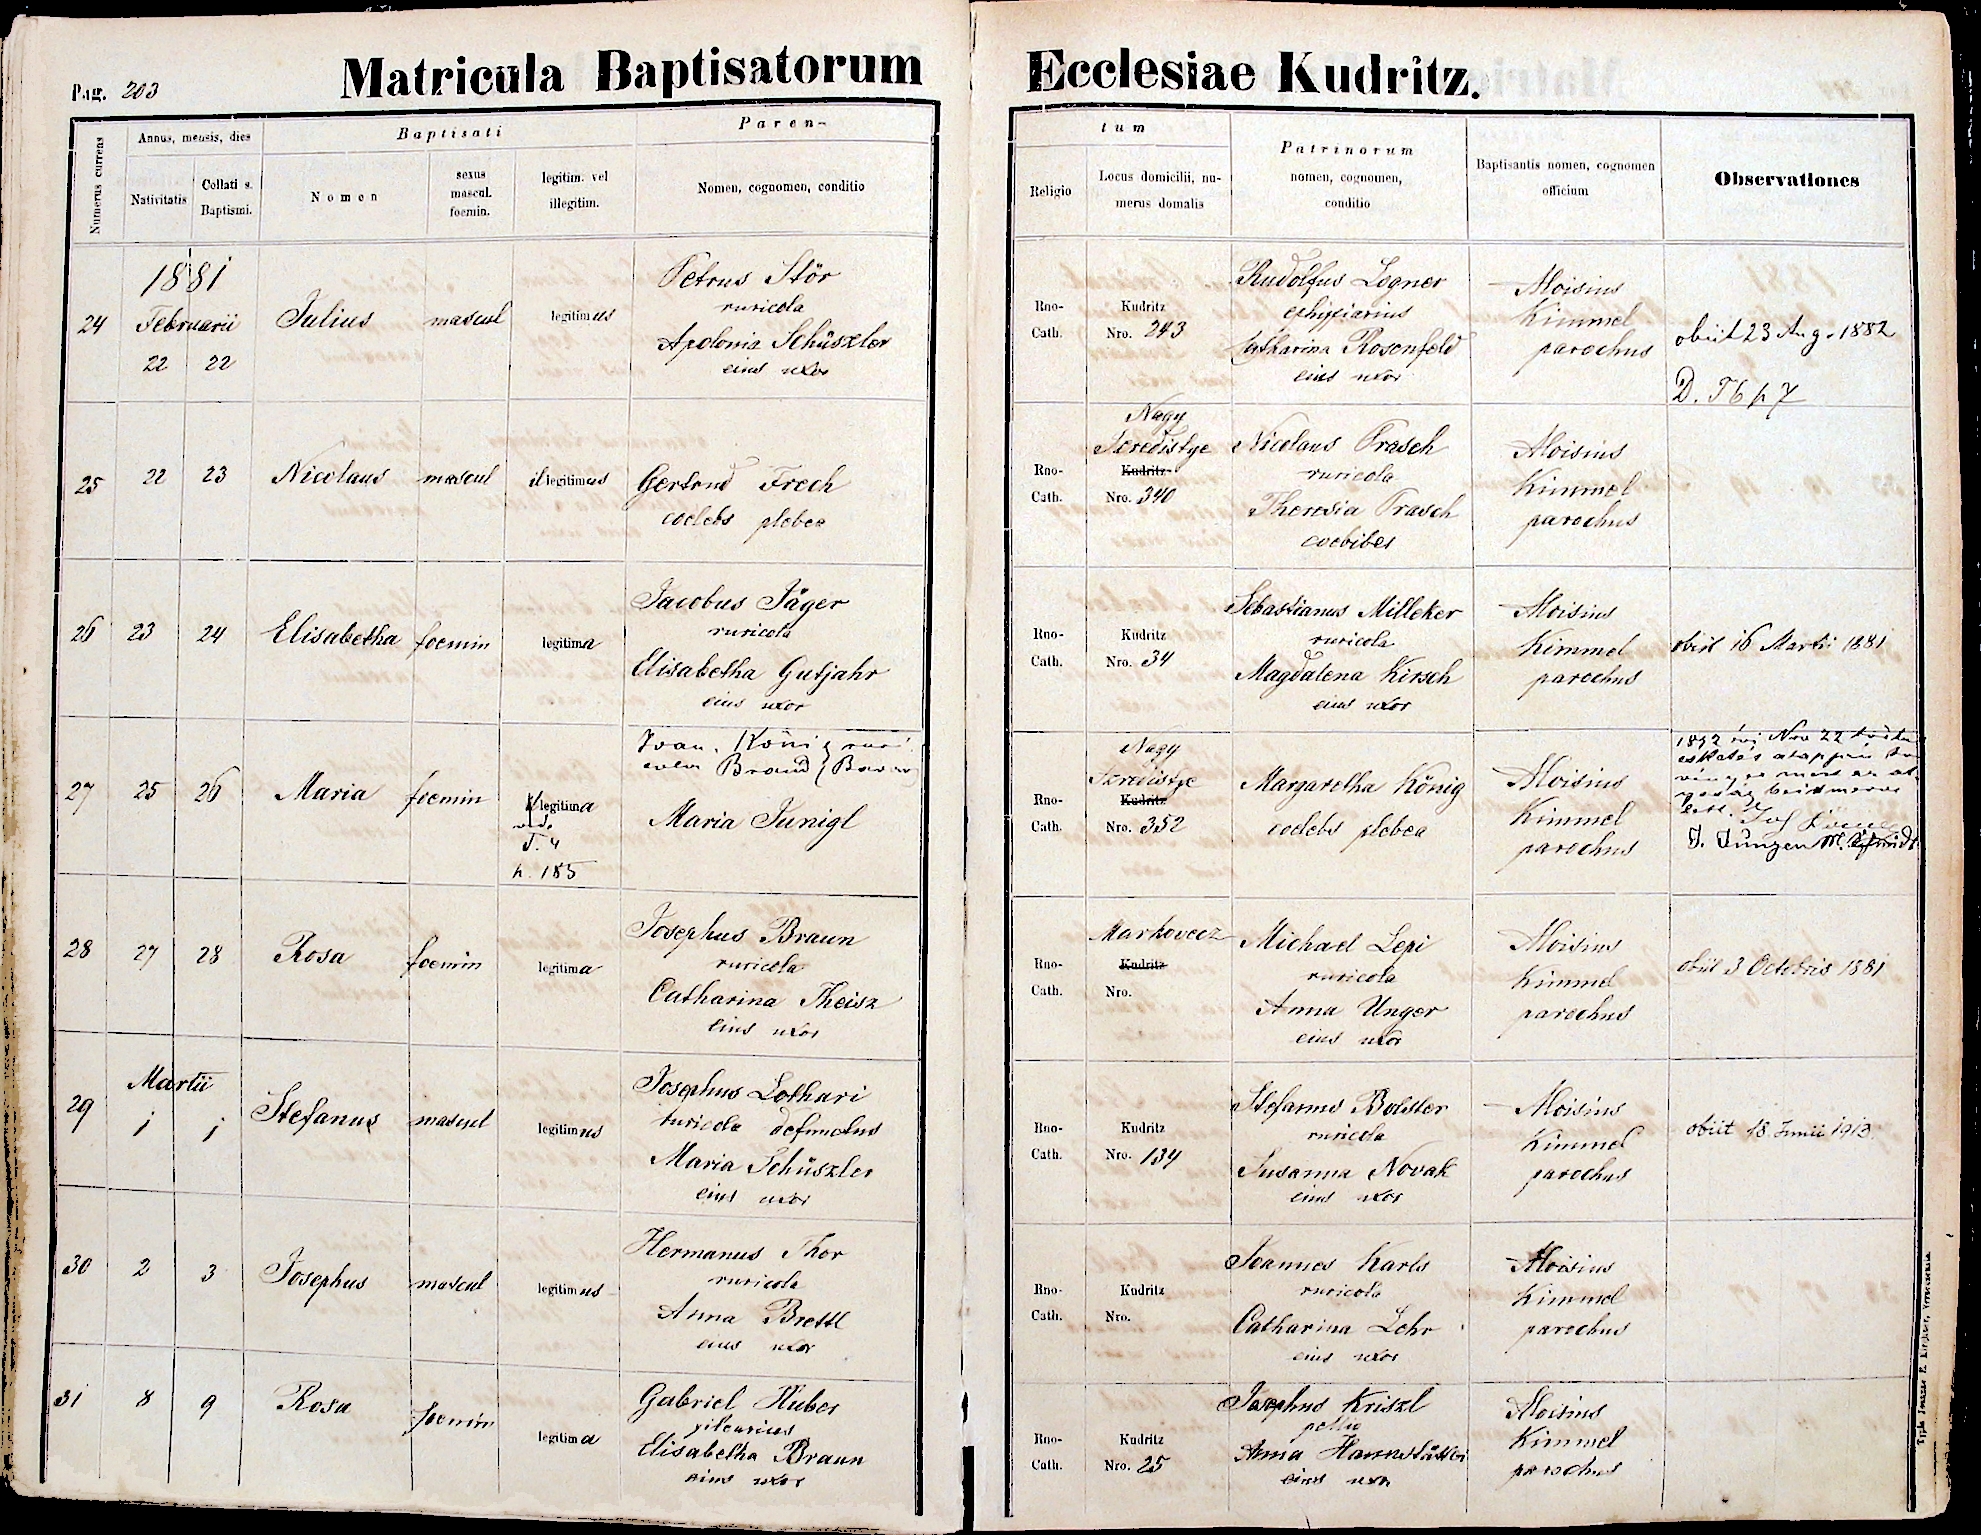 images/church_records/BIRTHS/1880-1883B/1881/203